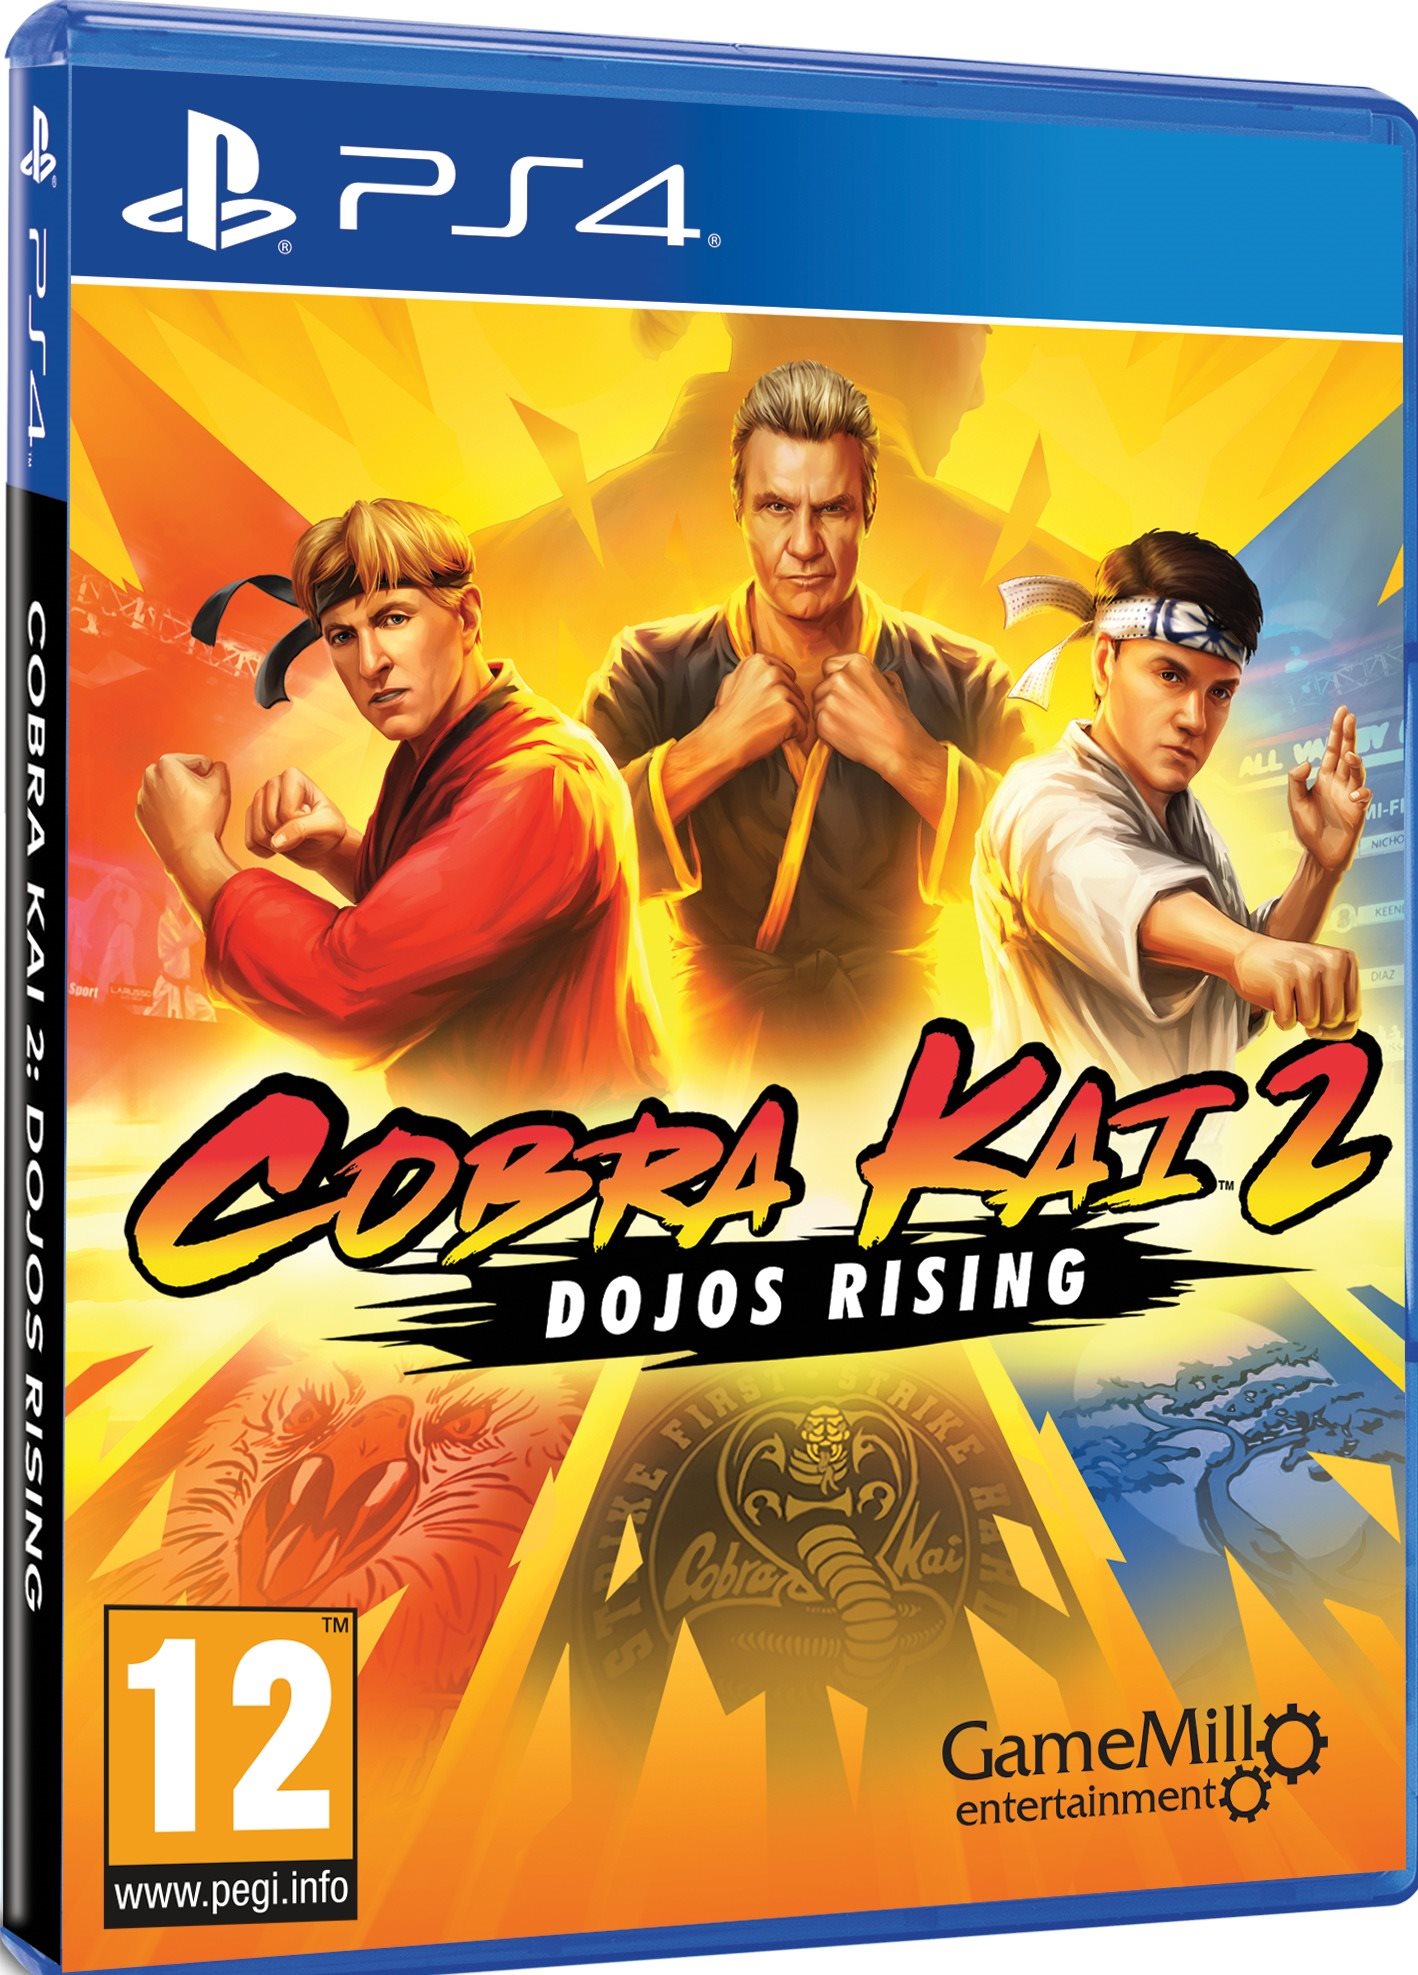 Konzol játék Cobra Kai 2: Dojos Rising - PS4